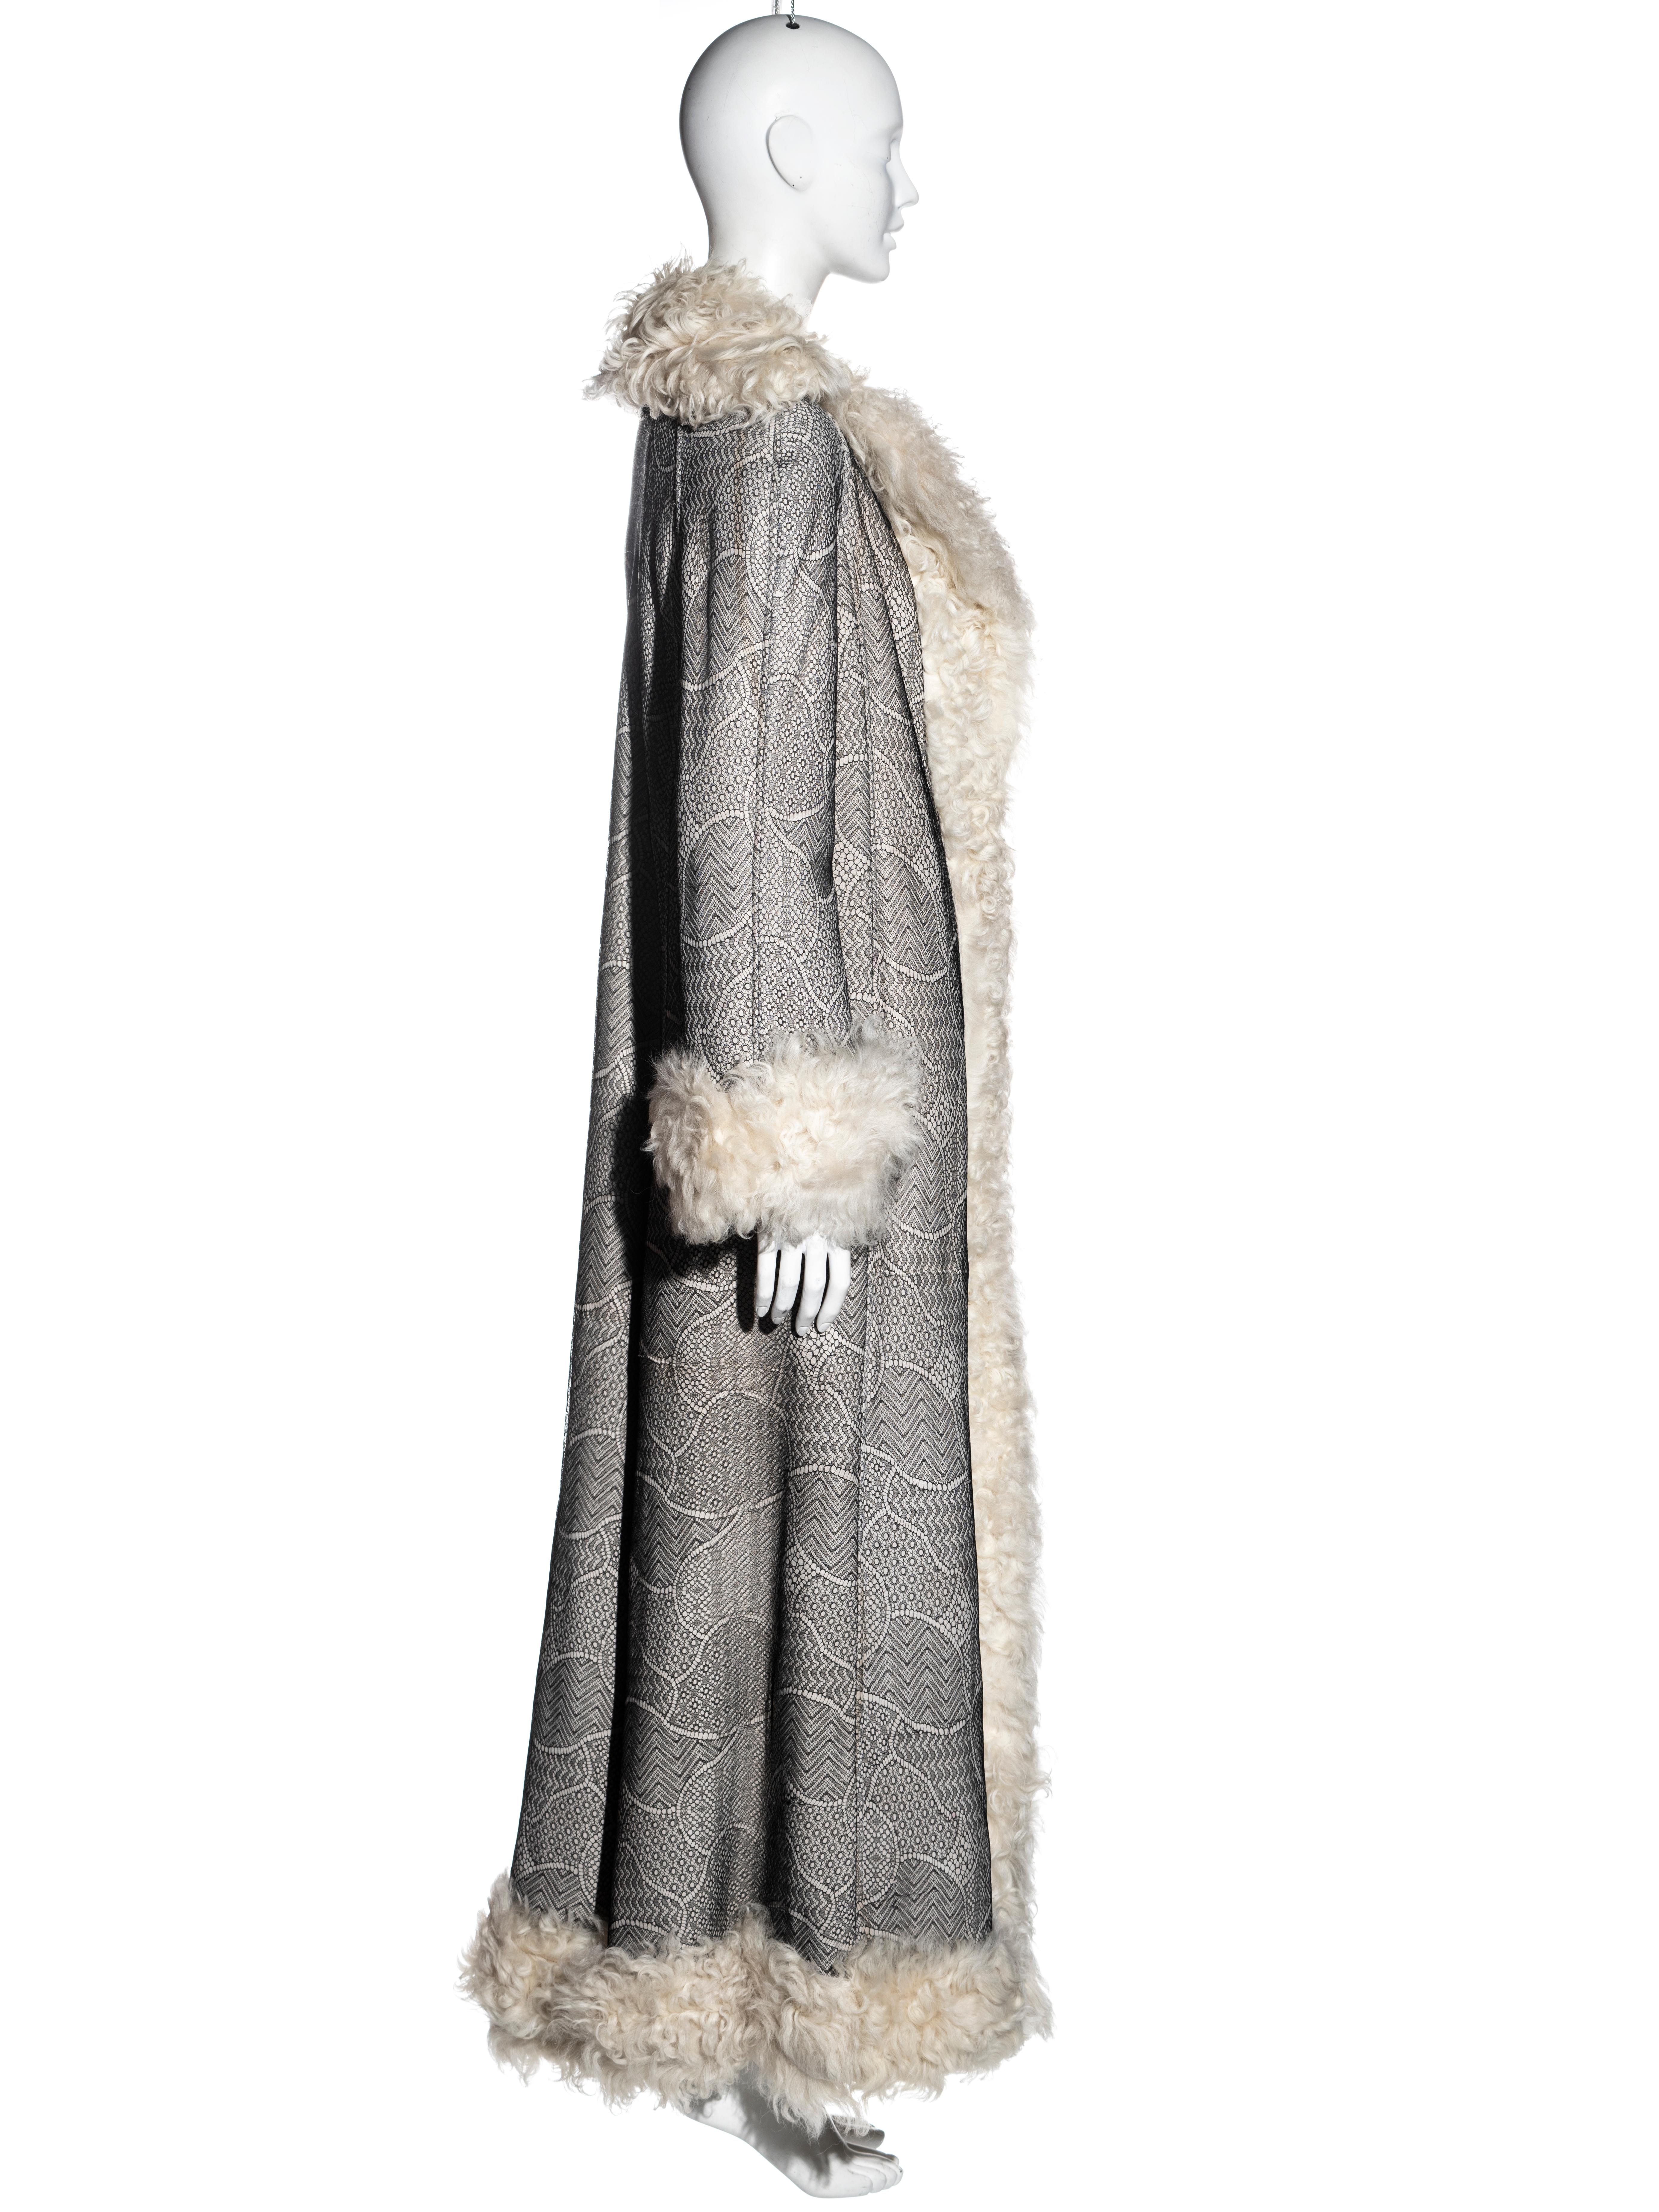 Christian Dior by John Galliano cream Persian lamb and lace coat, fw 2001 1